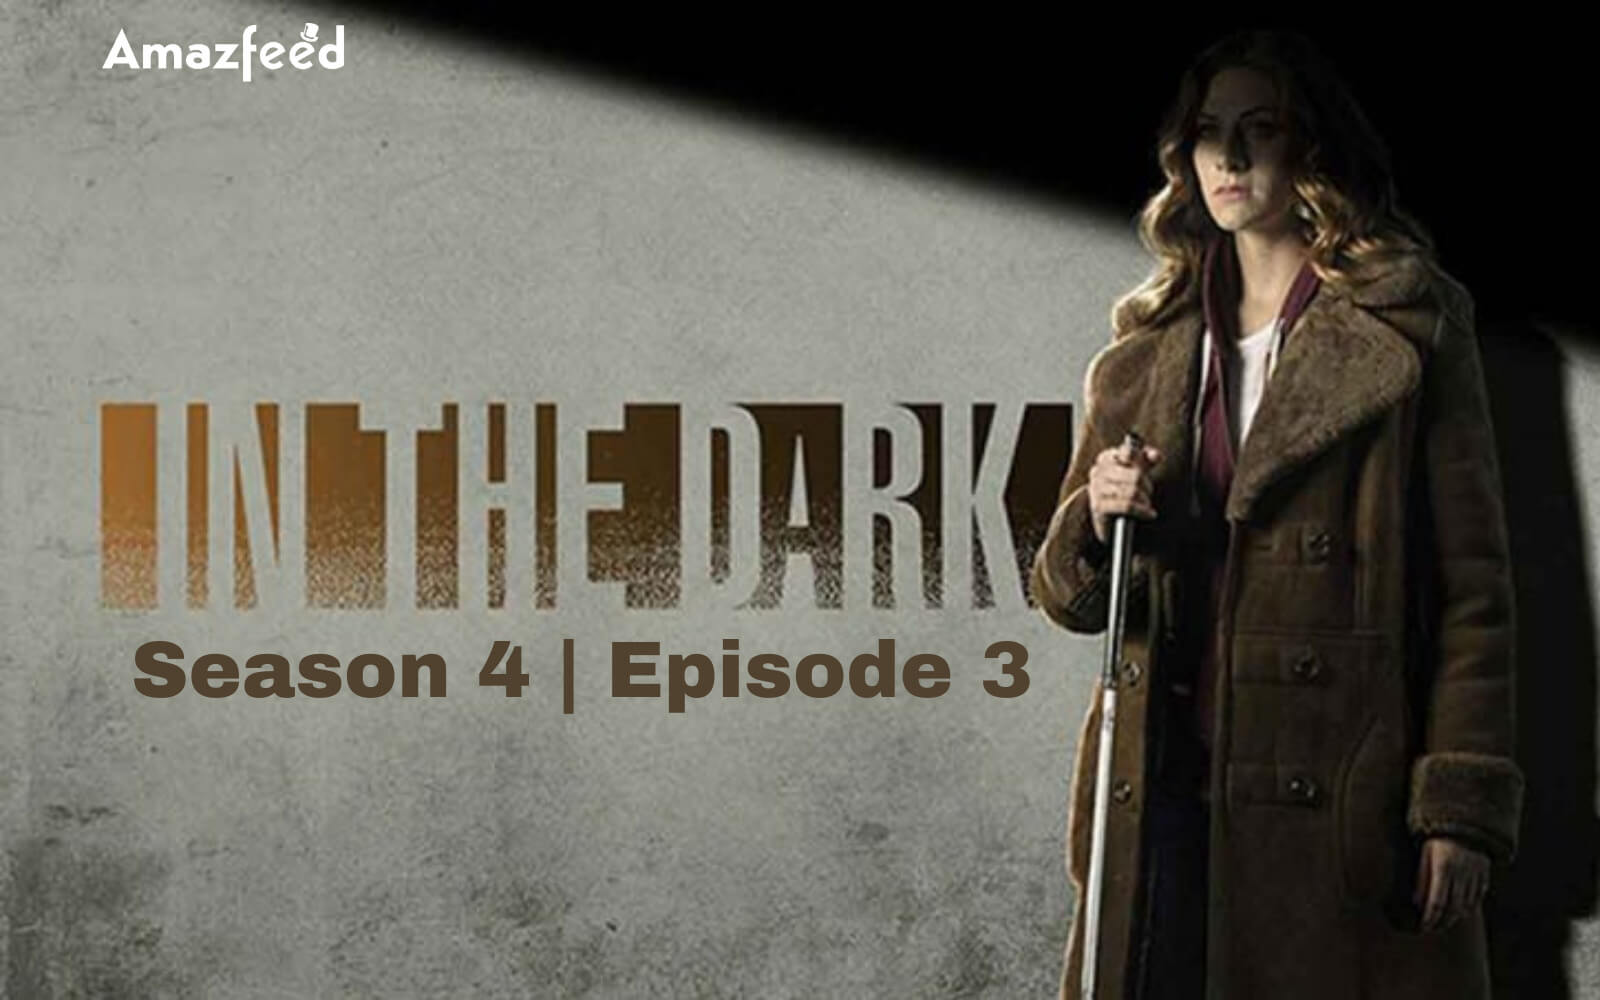 In the Dark Season 4 Episode 3 Release date